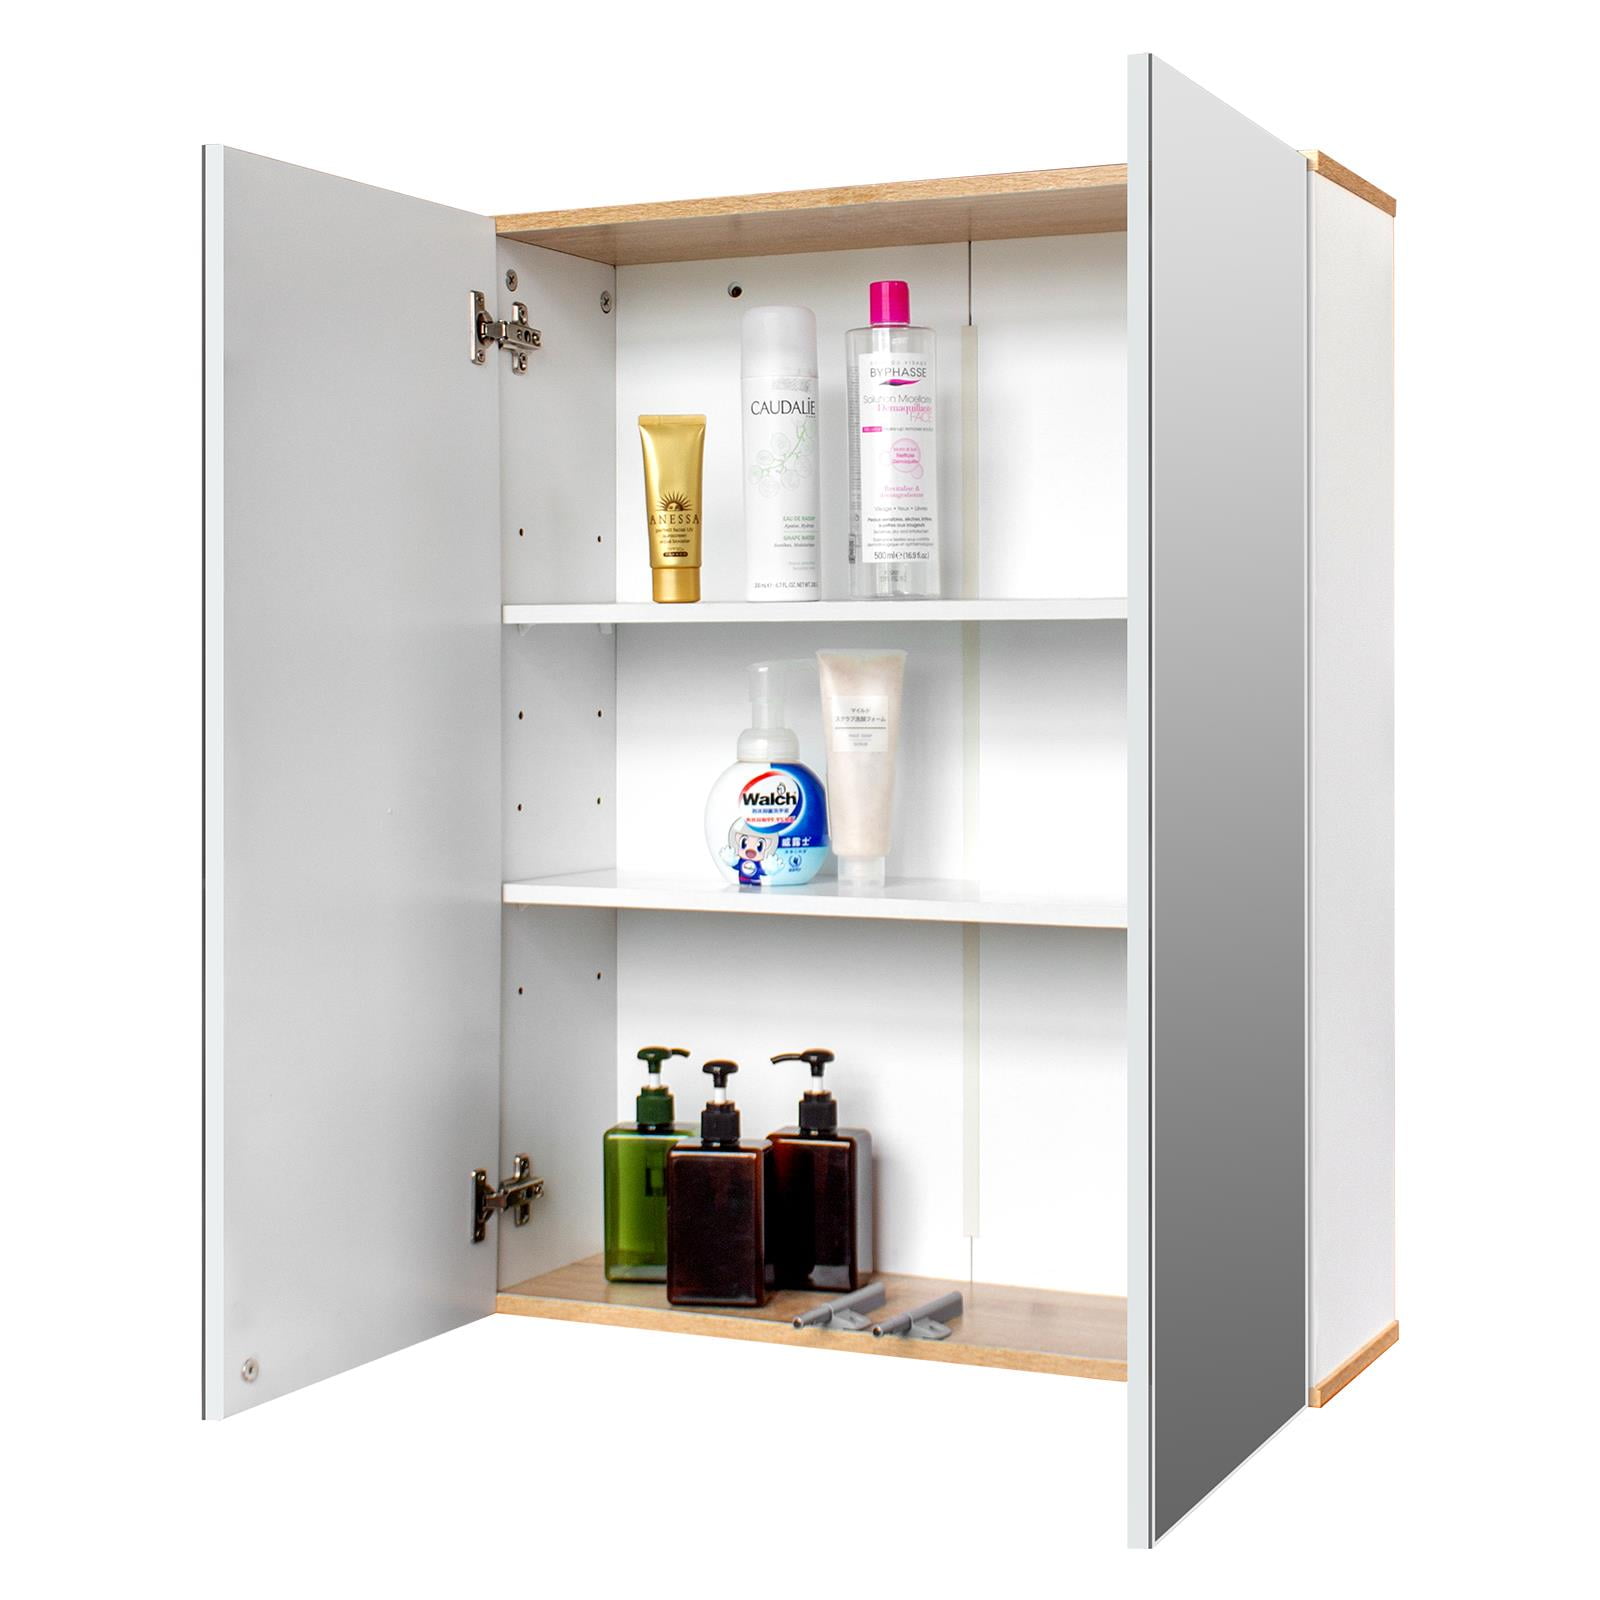 VIAGDO Wall Cabinet Bathroom Storage Cabinet Wall Mounted with Adjustable Shelves Inside, Double Door Medicine Cabinet, Utility Cabinet Organizer